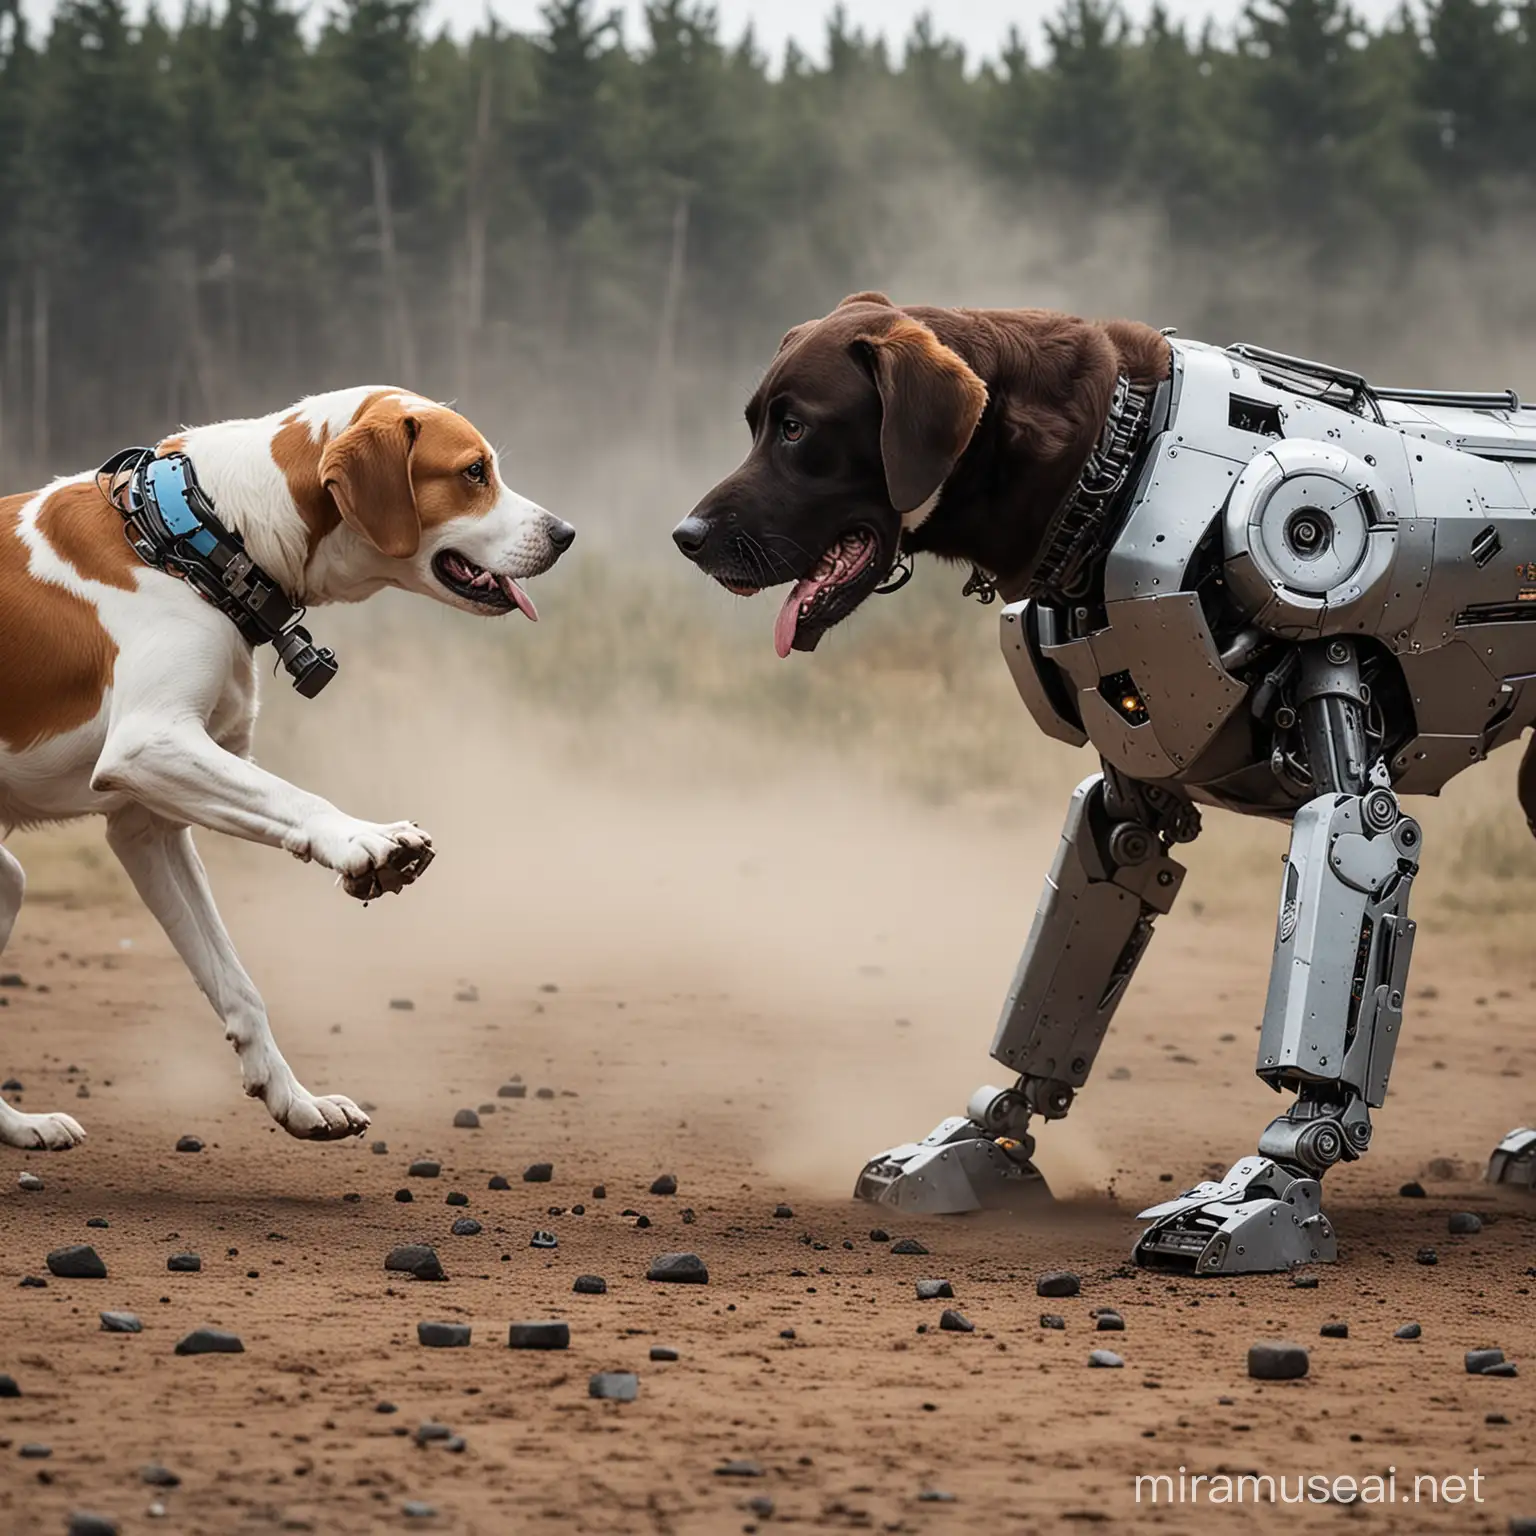 Canine Warrior Confronts Futuristic Robot in Intense Battle